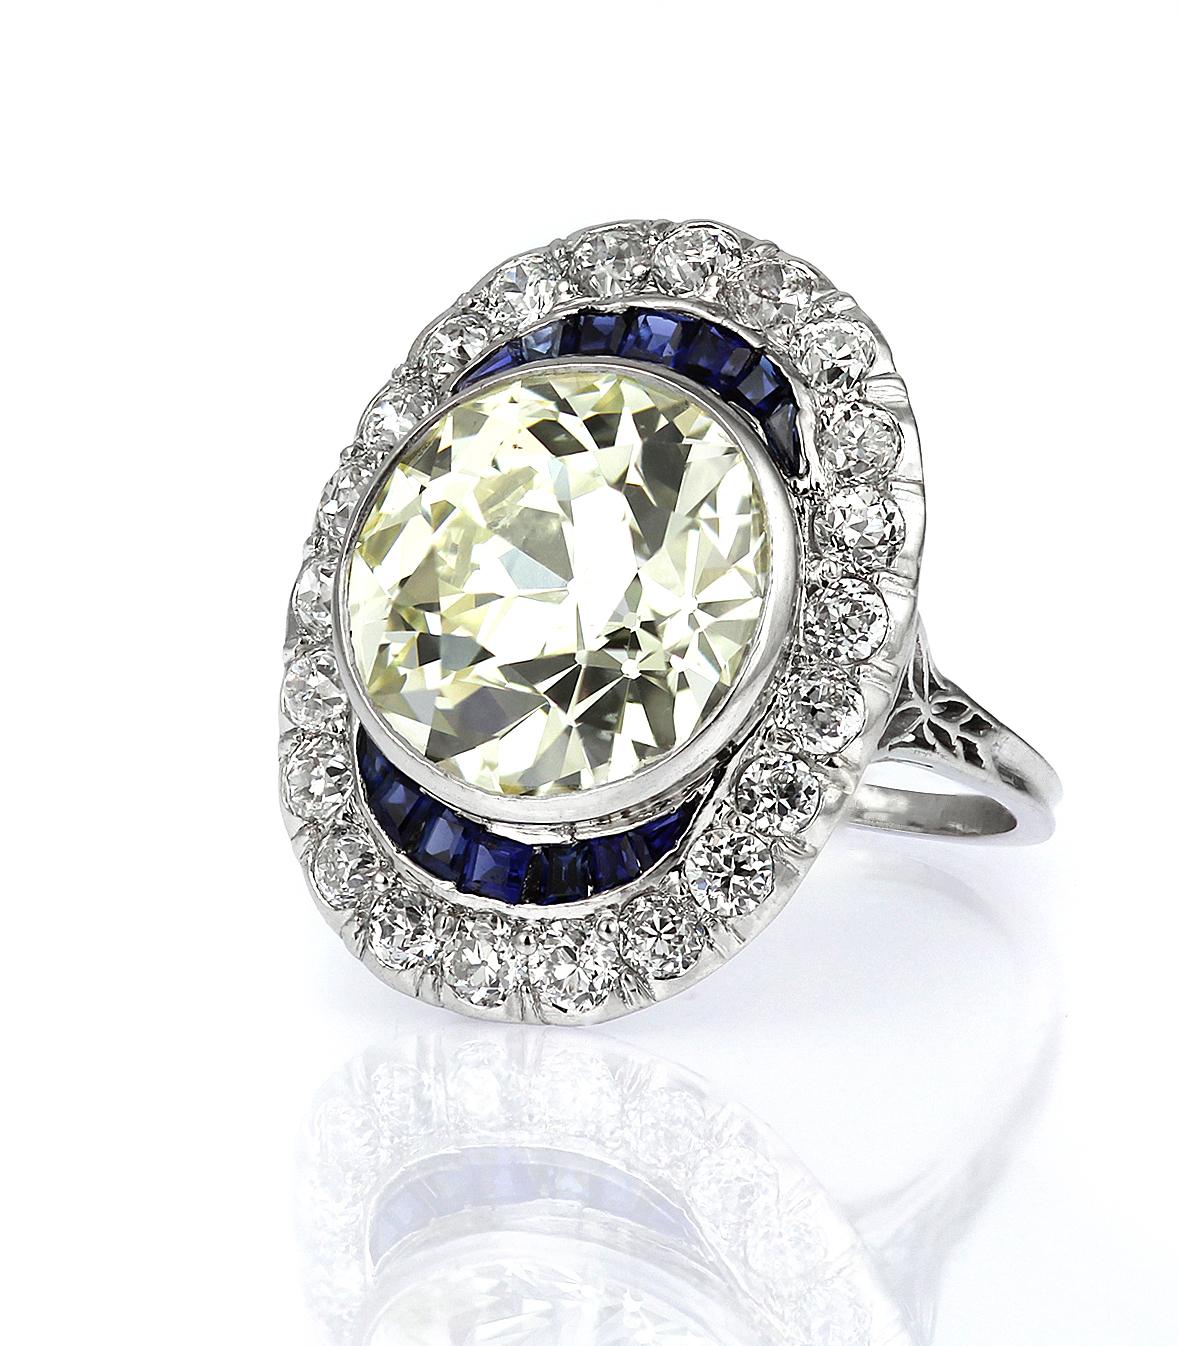 Old European Cut Antique Big Diamond 6.6 ct with Sapphire Ring in Platinum